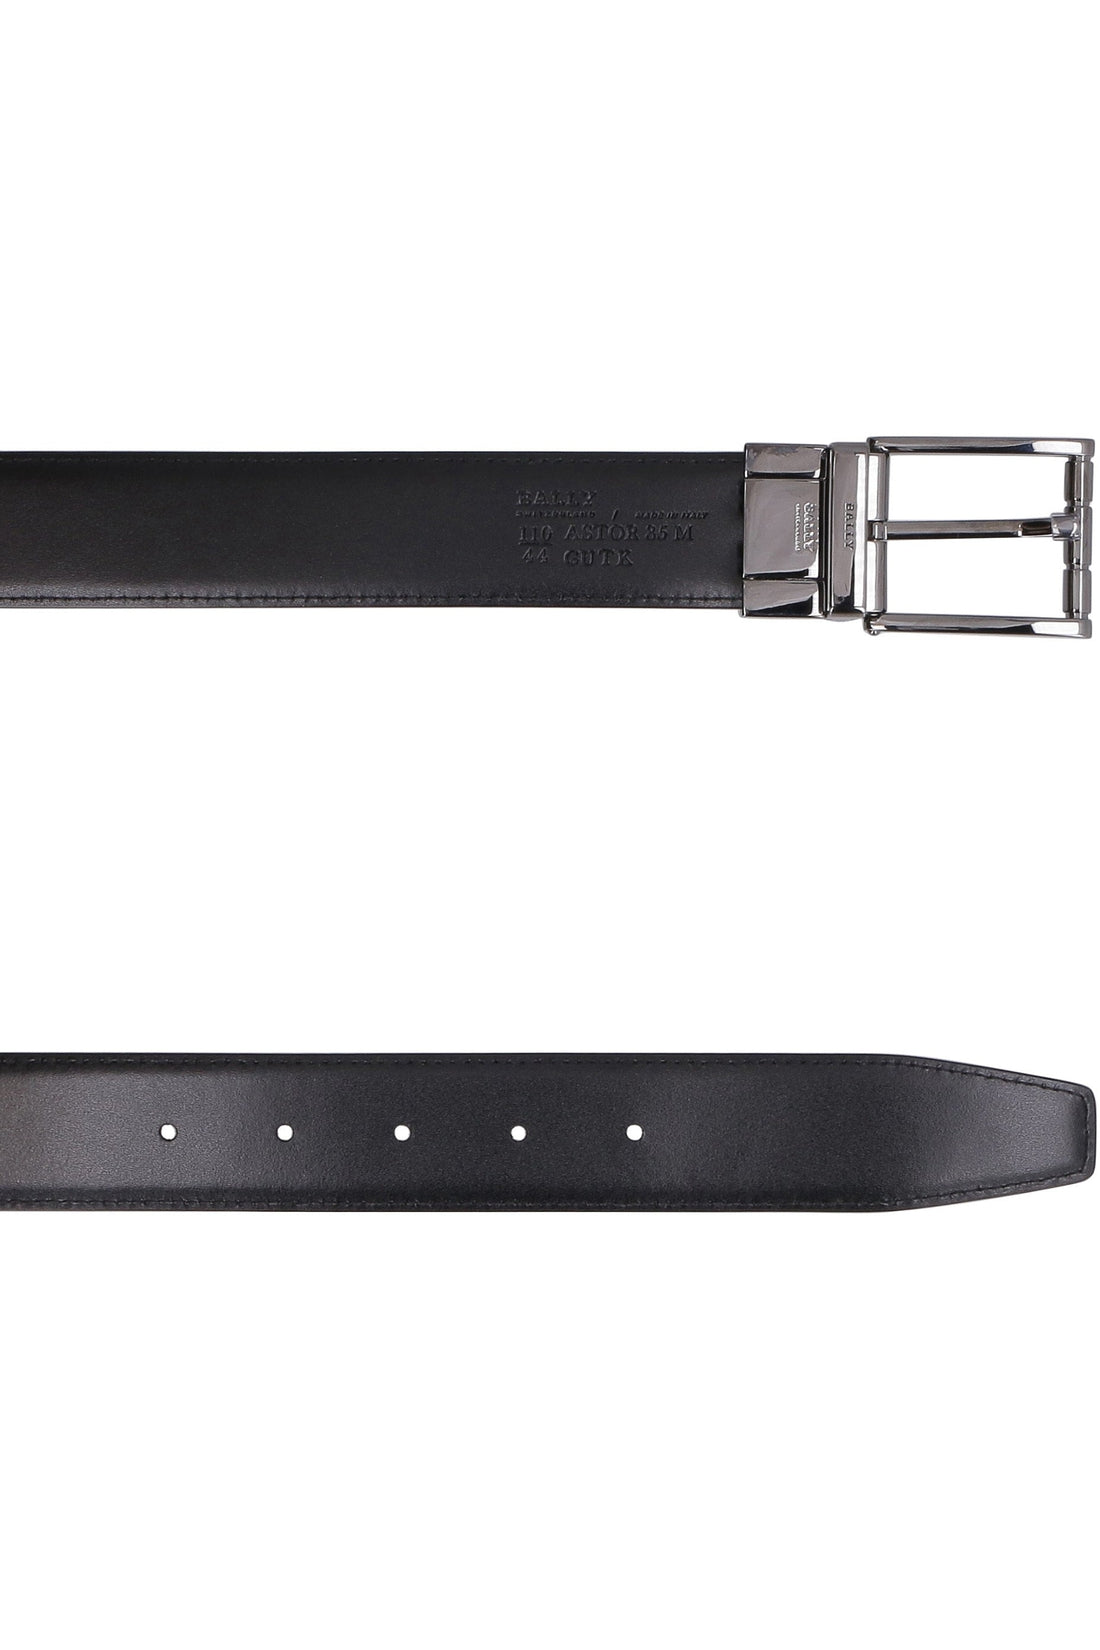 Bally-OUTLET-SALE-Astor reversible leather belt-ARCHIVIST